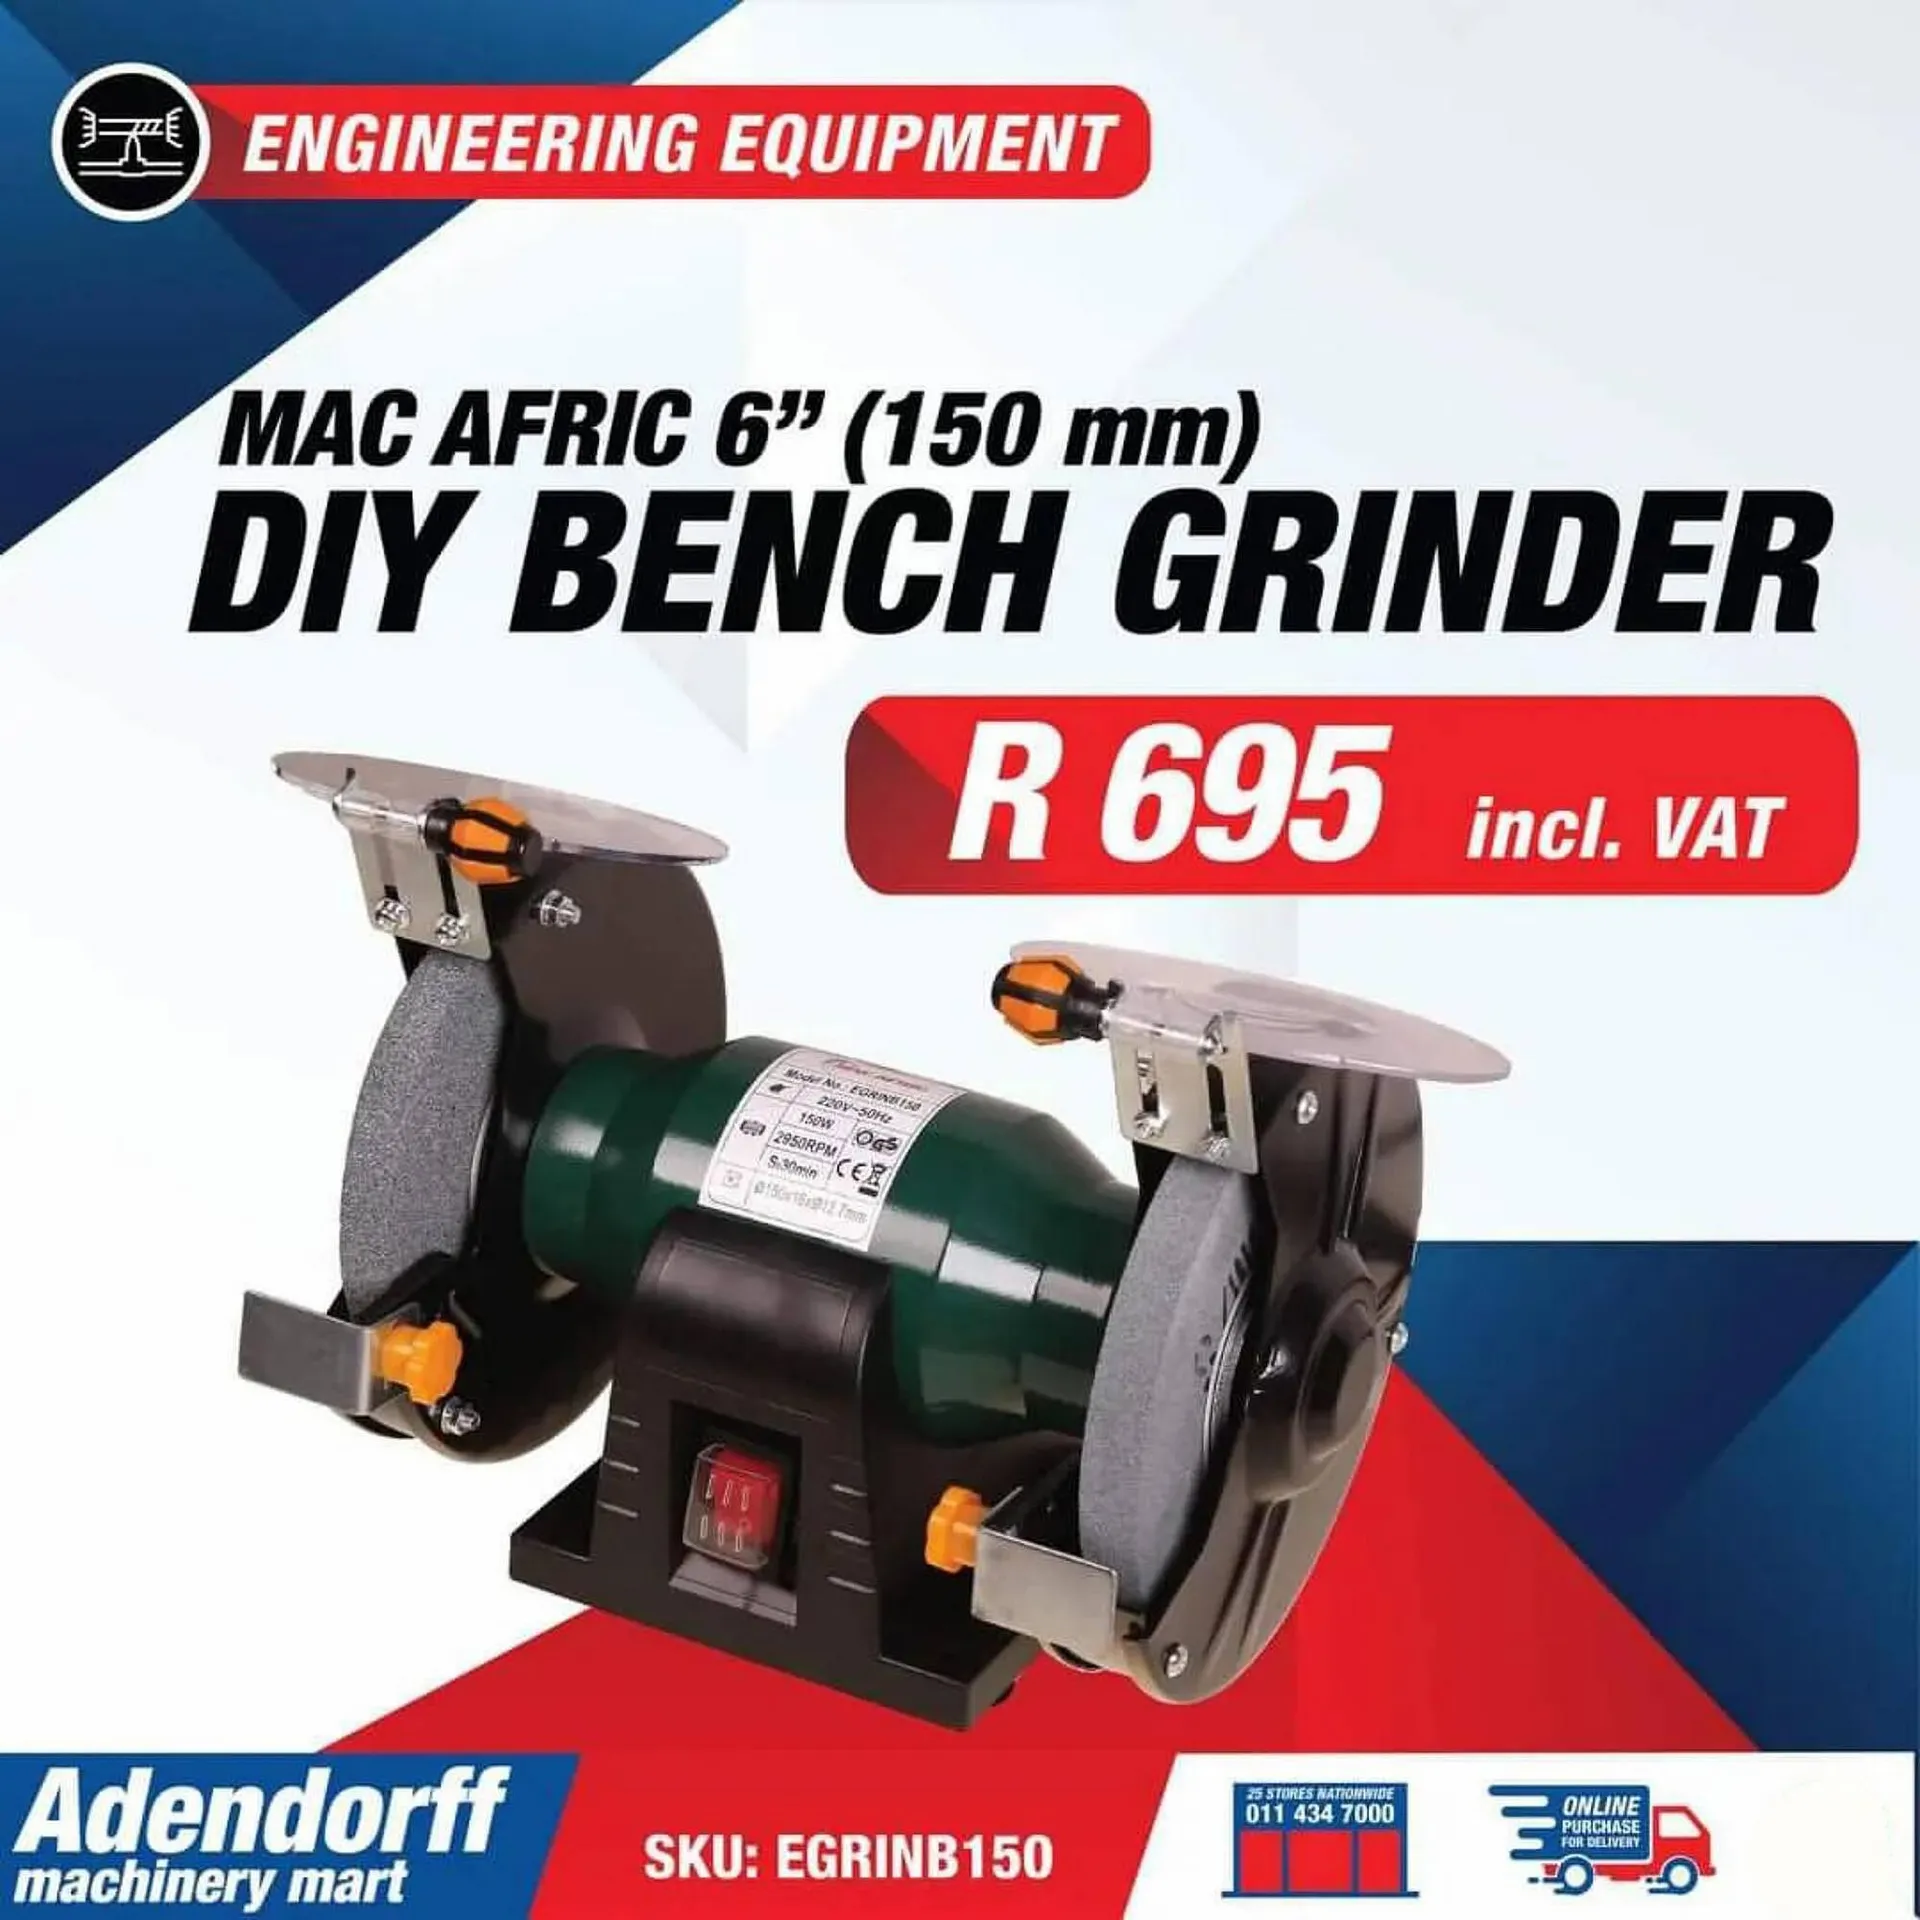 Adendorff Machinery Mart catalogue - 1